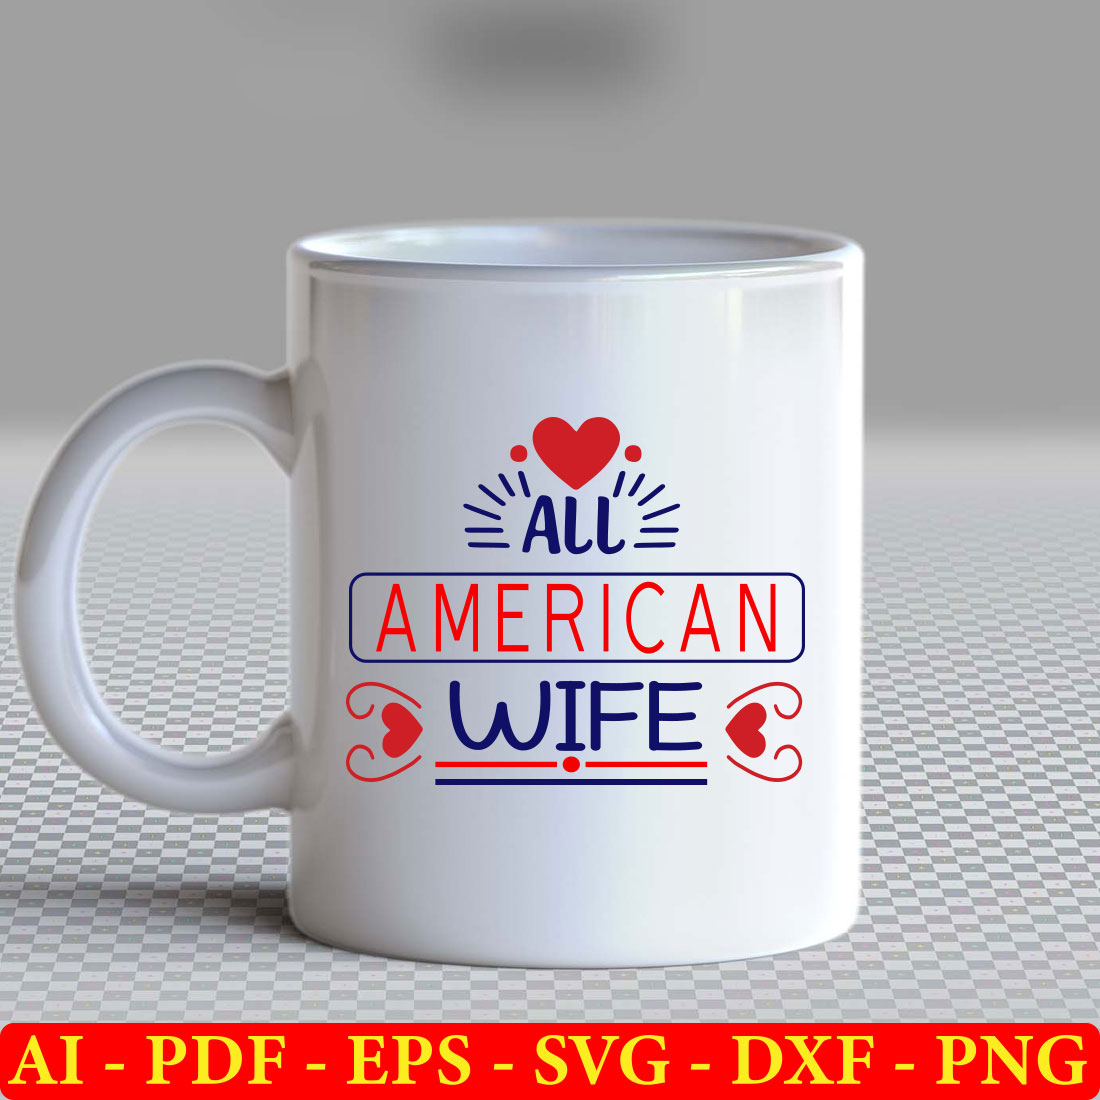 White coffee mug with an american wife on it.